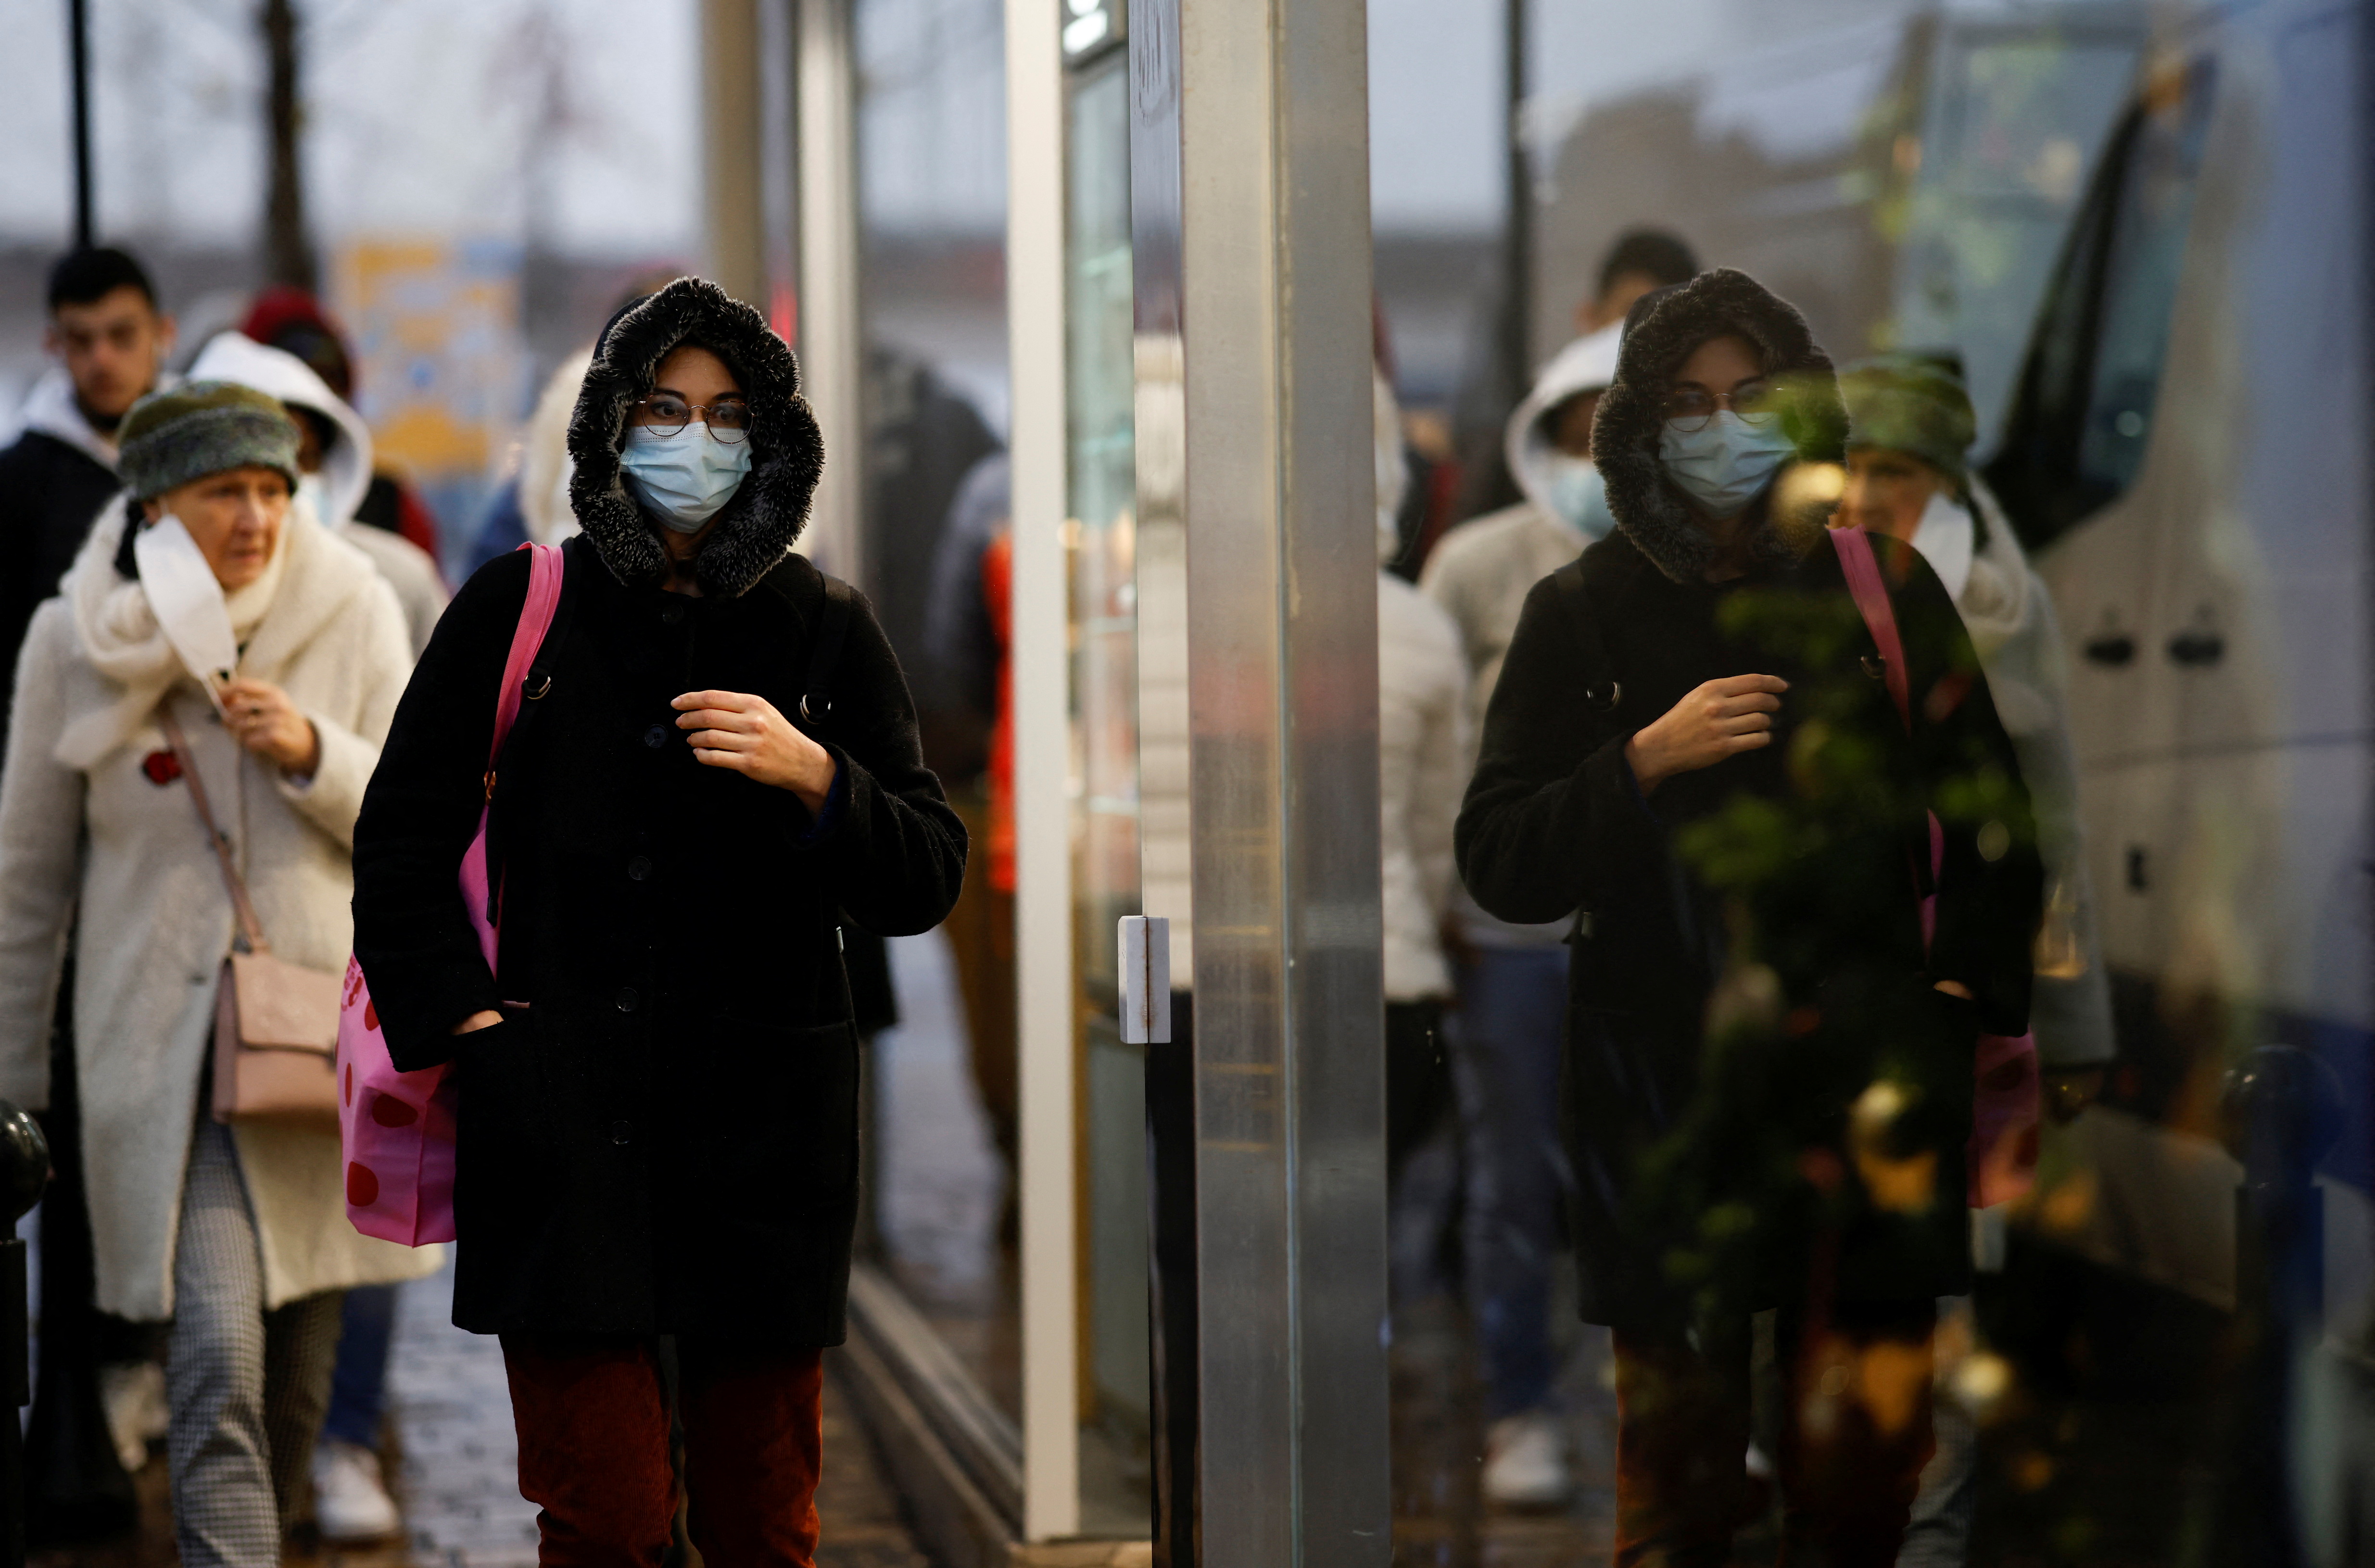 People wearing face masks walk in Nantes amid the coronavirus disease (COVID-19) outbreak in France, December 9, 2021. REUTERS/Stephane Mahe